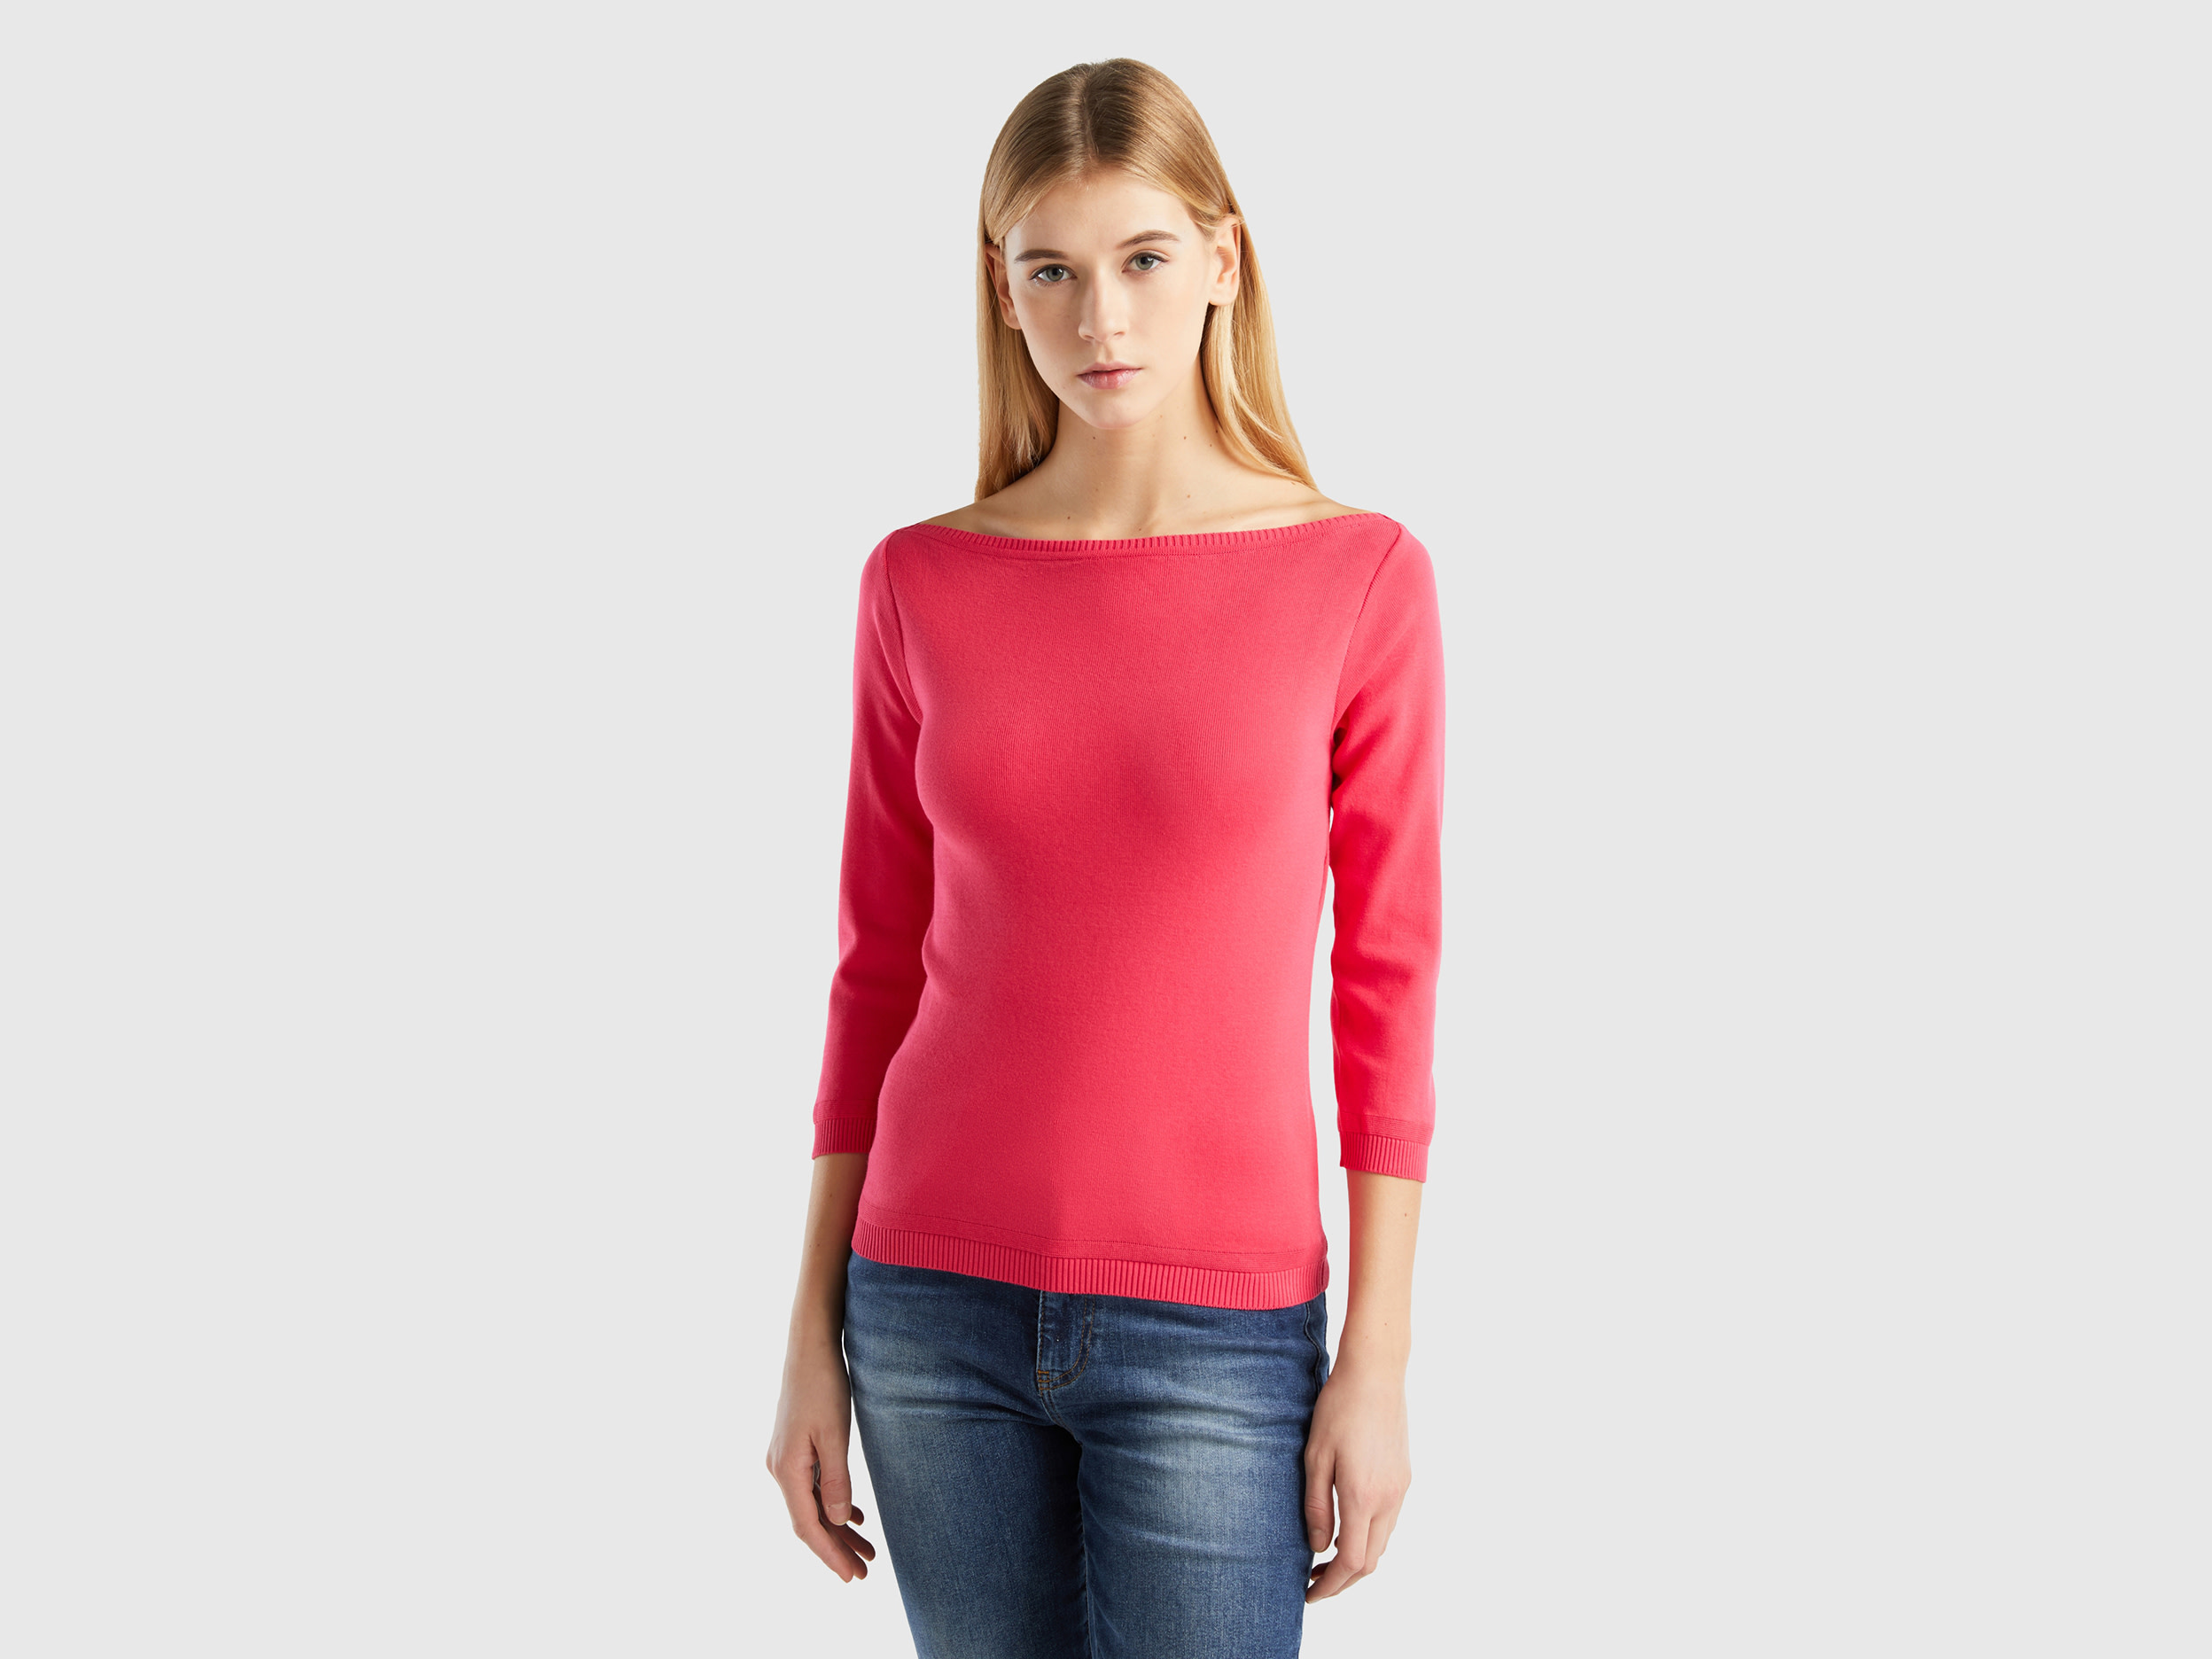 Benetton, 100% Cotton Boat Neck Sweater, size XS, Fuchsia, Women